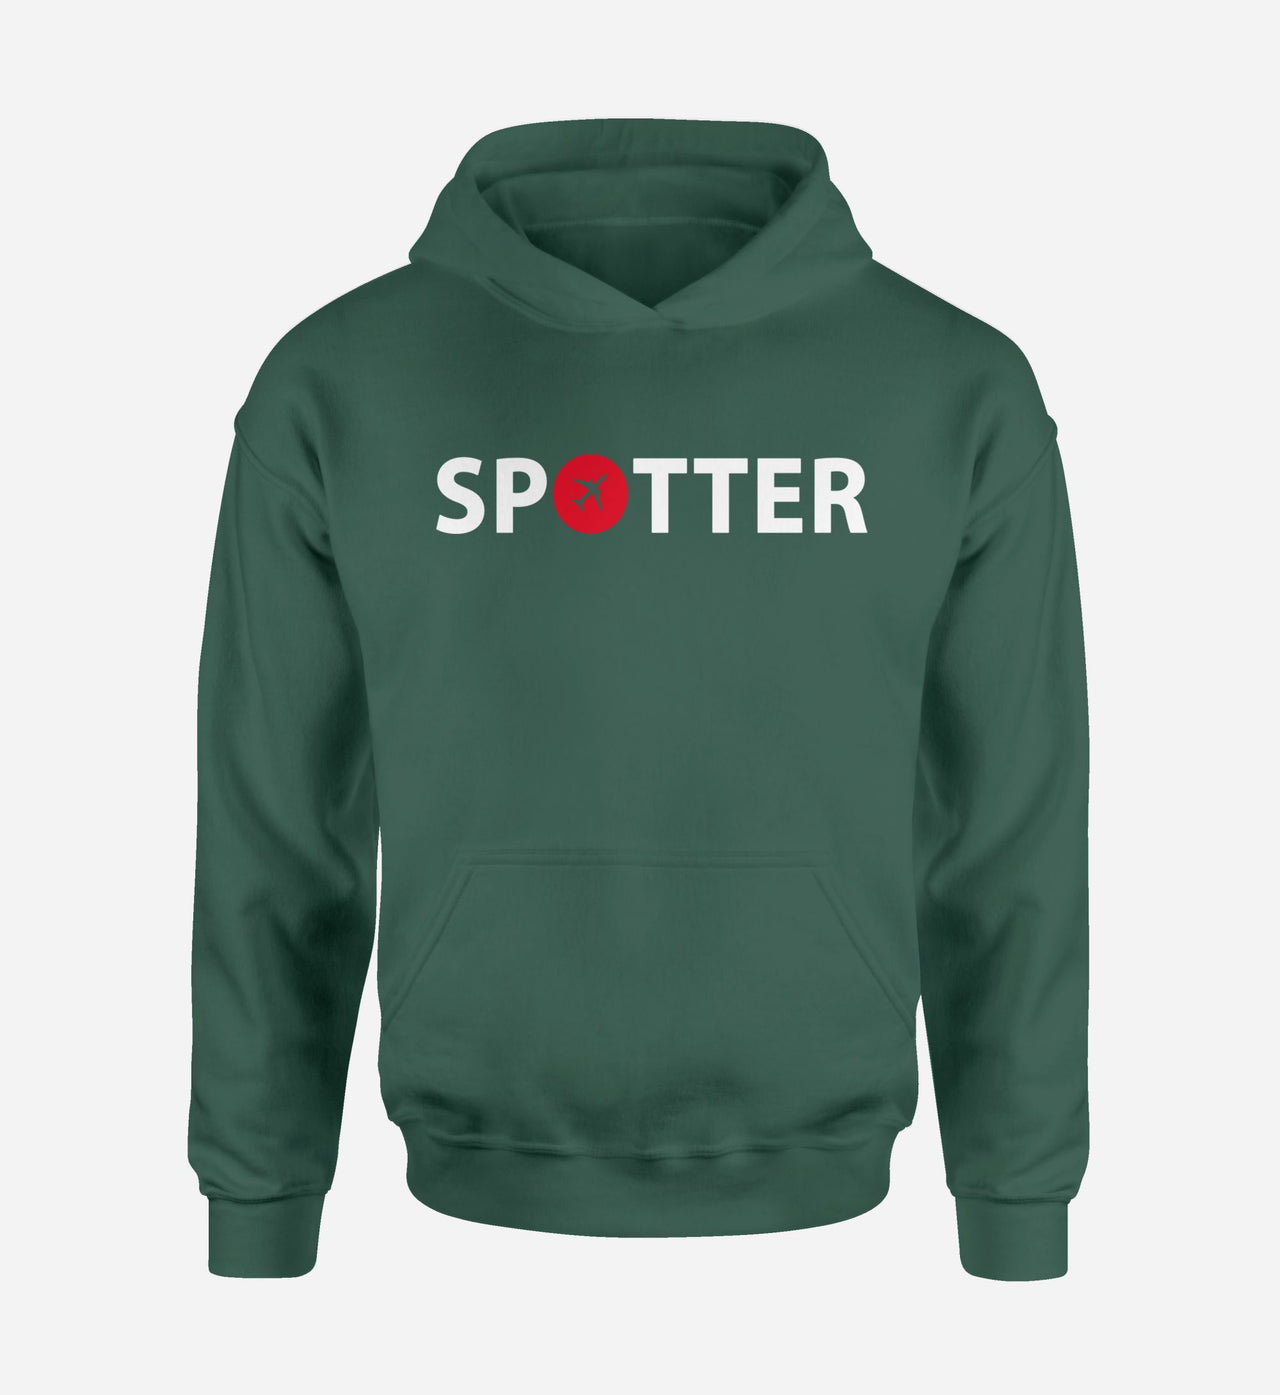 Spotter Designed Hoodies